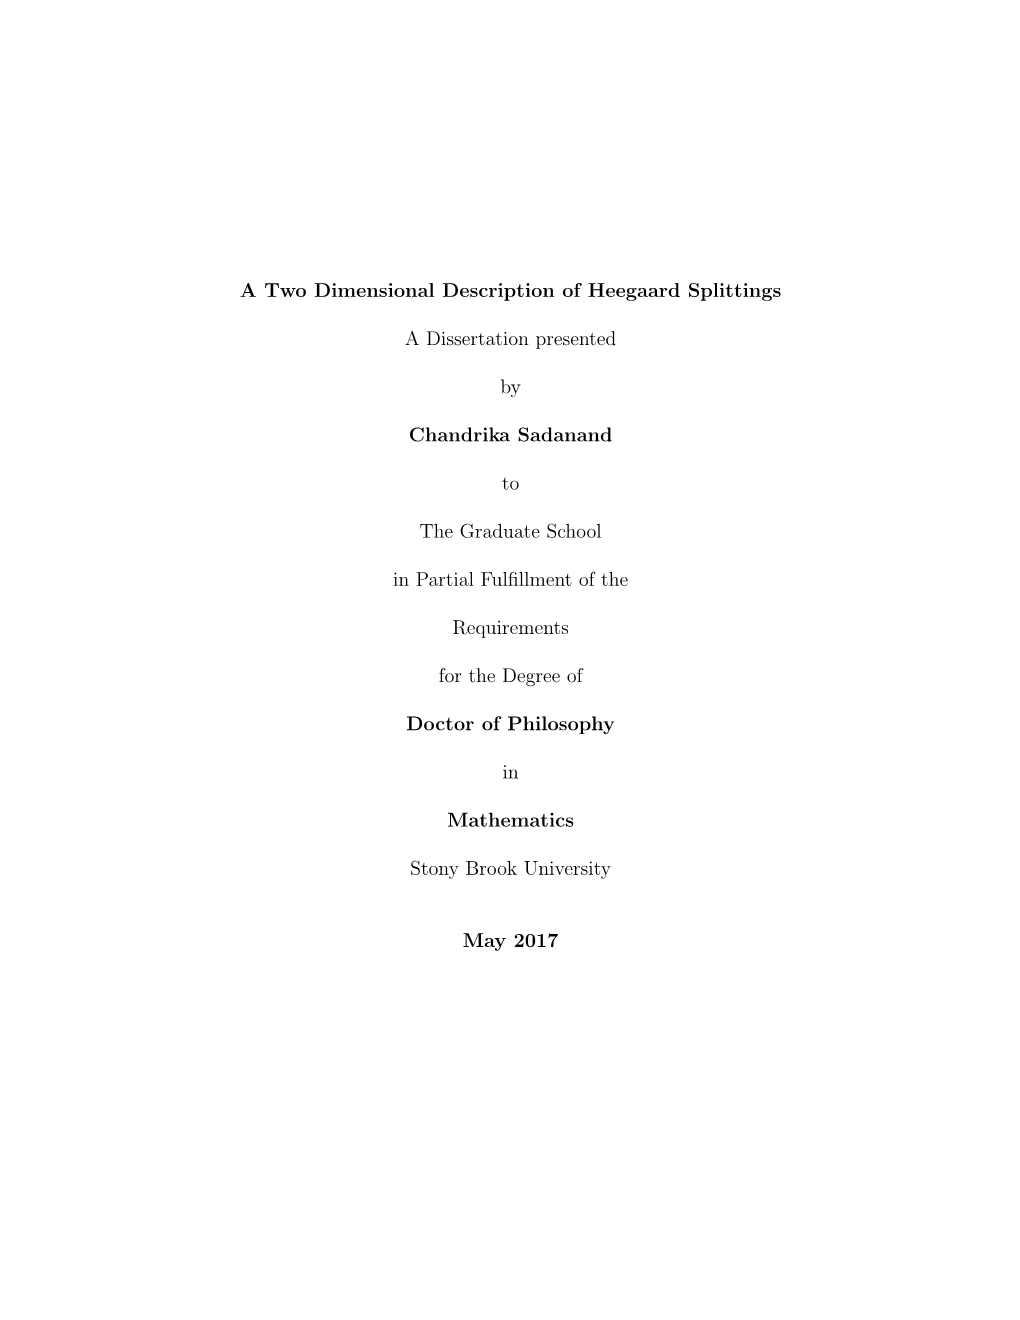 A Two Dimensional Description of Heegaard Splittings a Dissertation